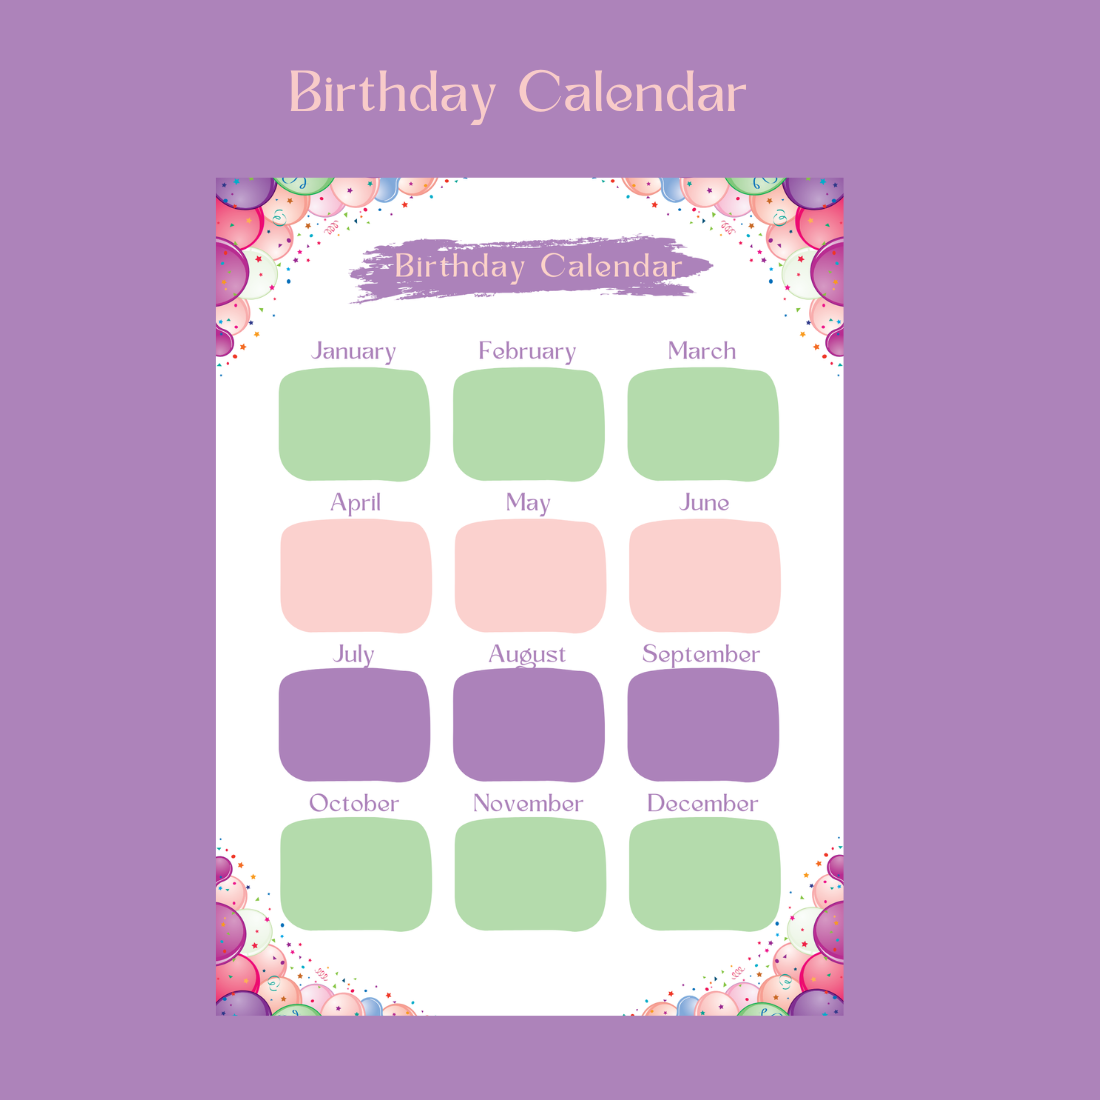 Birthday calendar, printable calendar, A4 PDF, birthday organizer, monthly calendar, birthday reminders, elegant calendar template, high-resolution calendar cover image.